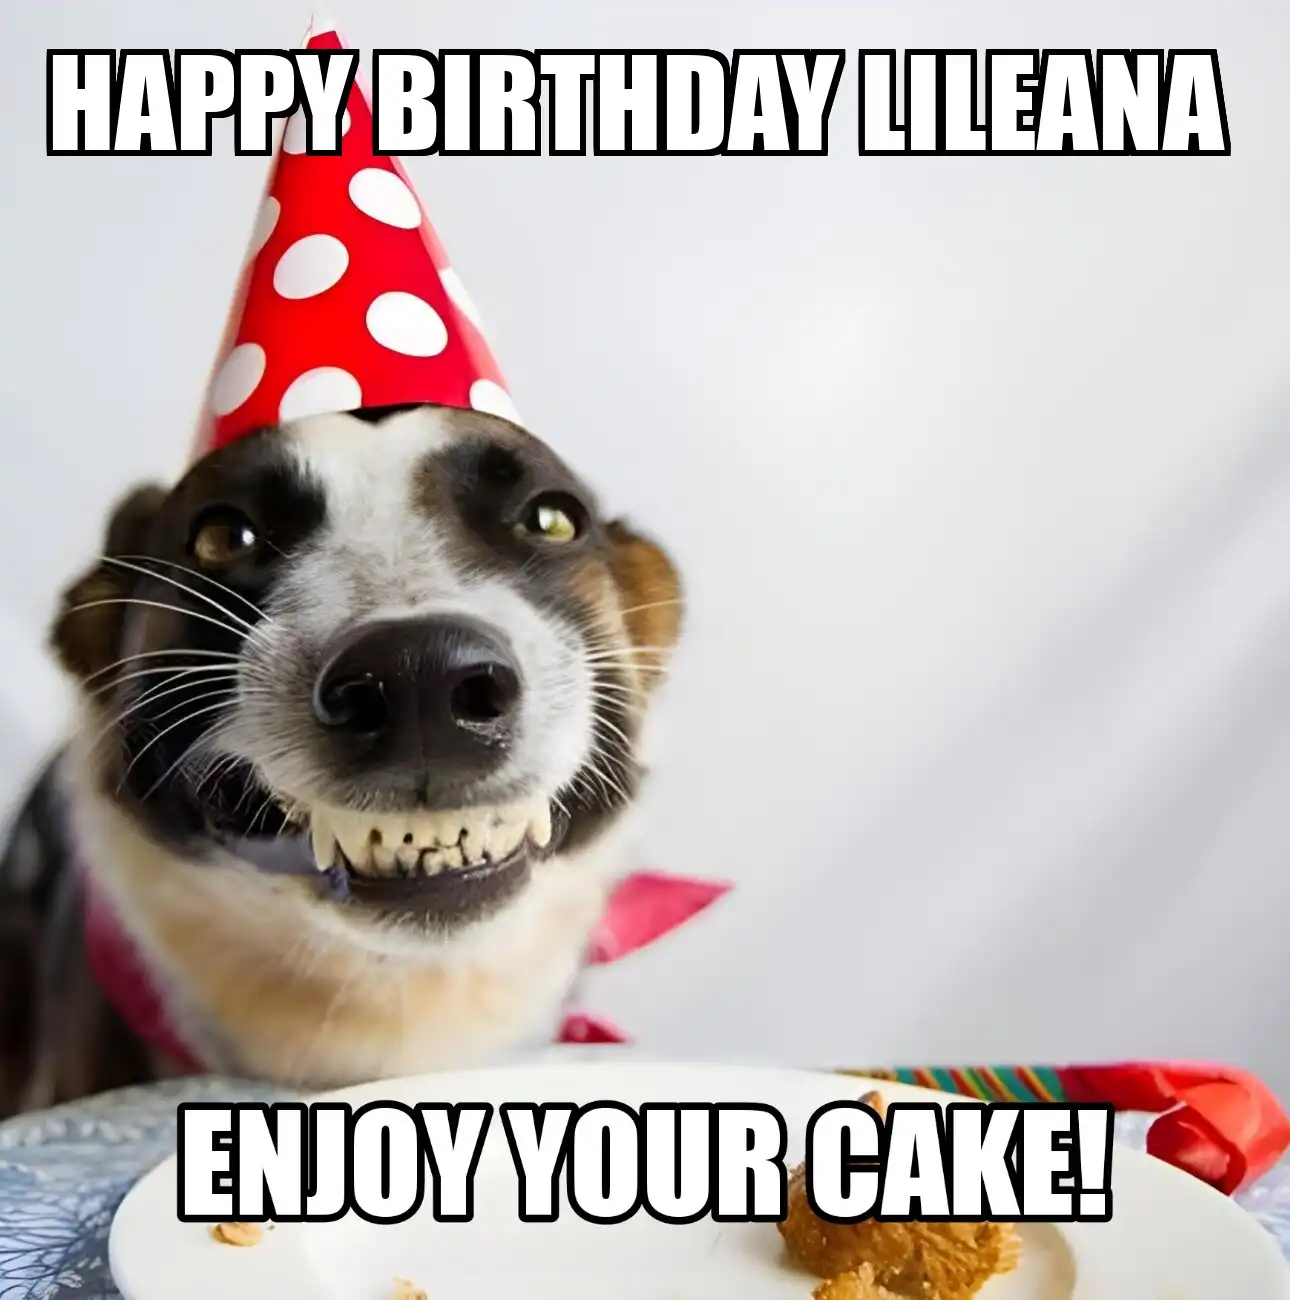 Happy Birthday Lileana Enjoy Your Cake Dog Meme